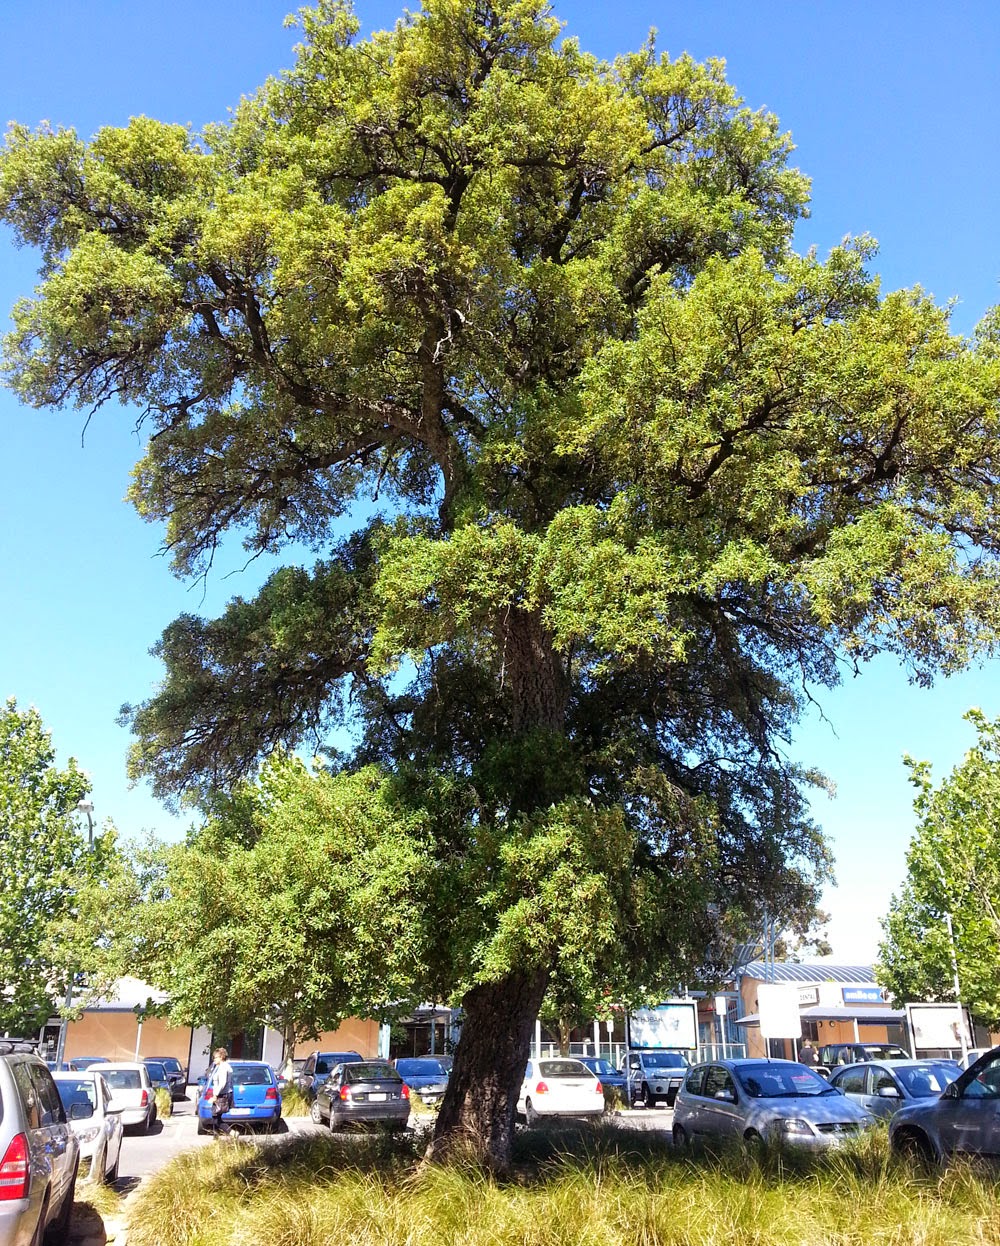 The Norwood Cork Tree